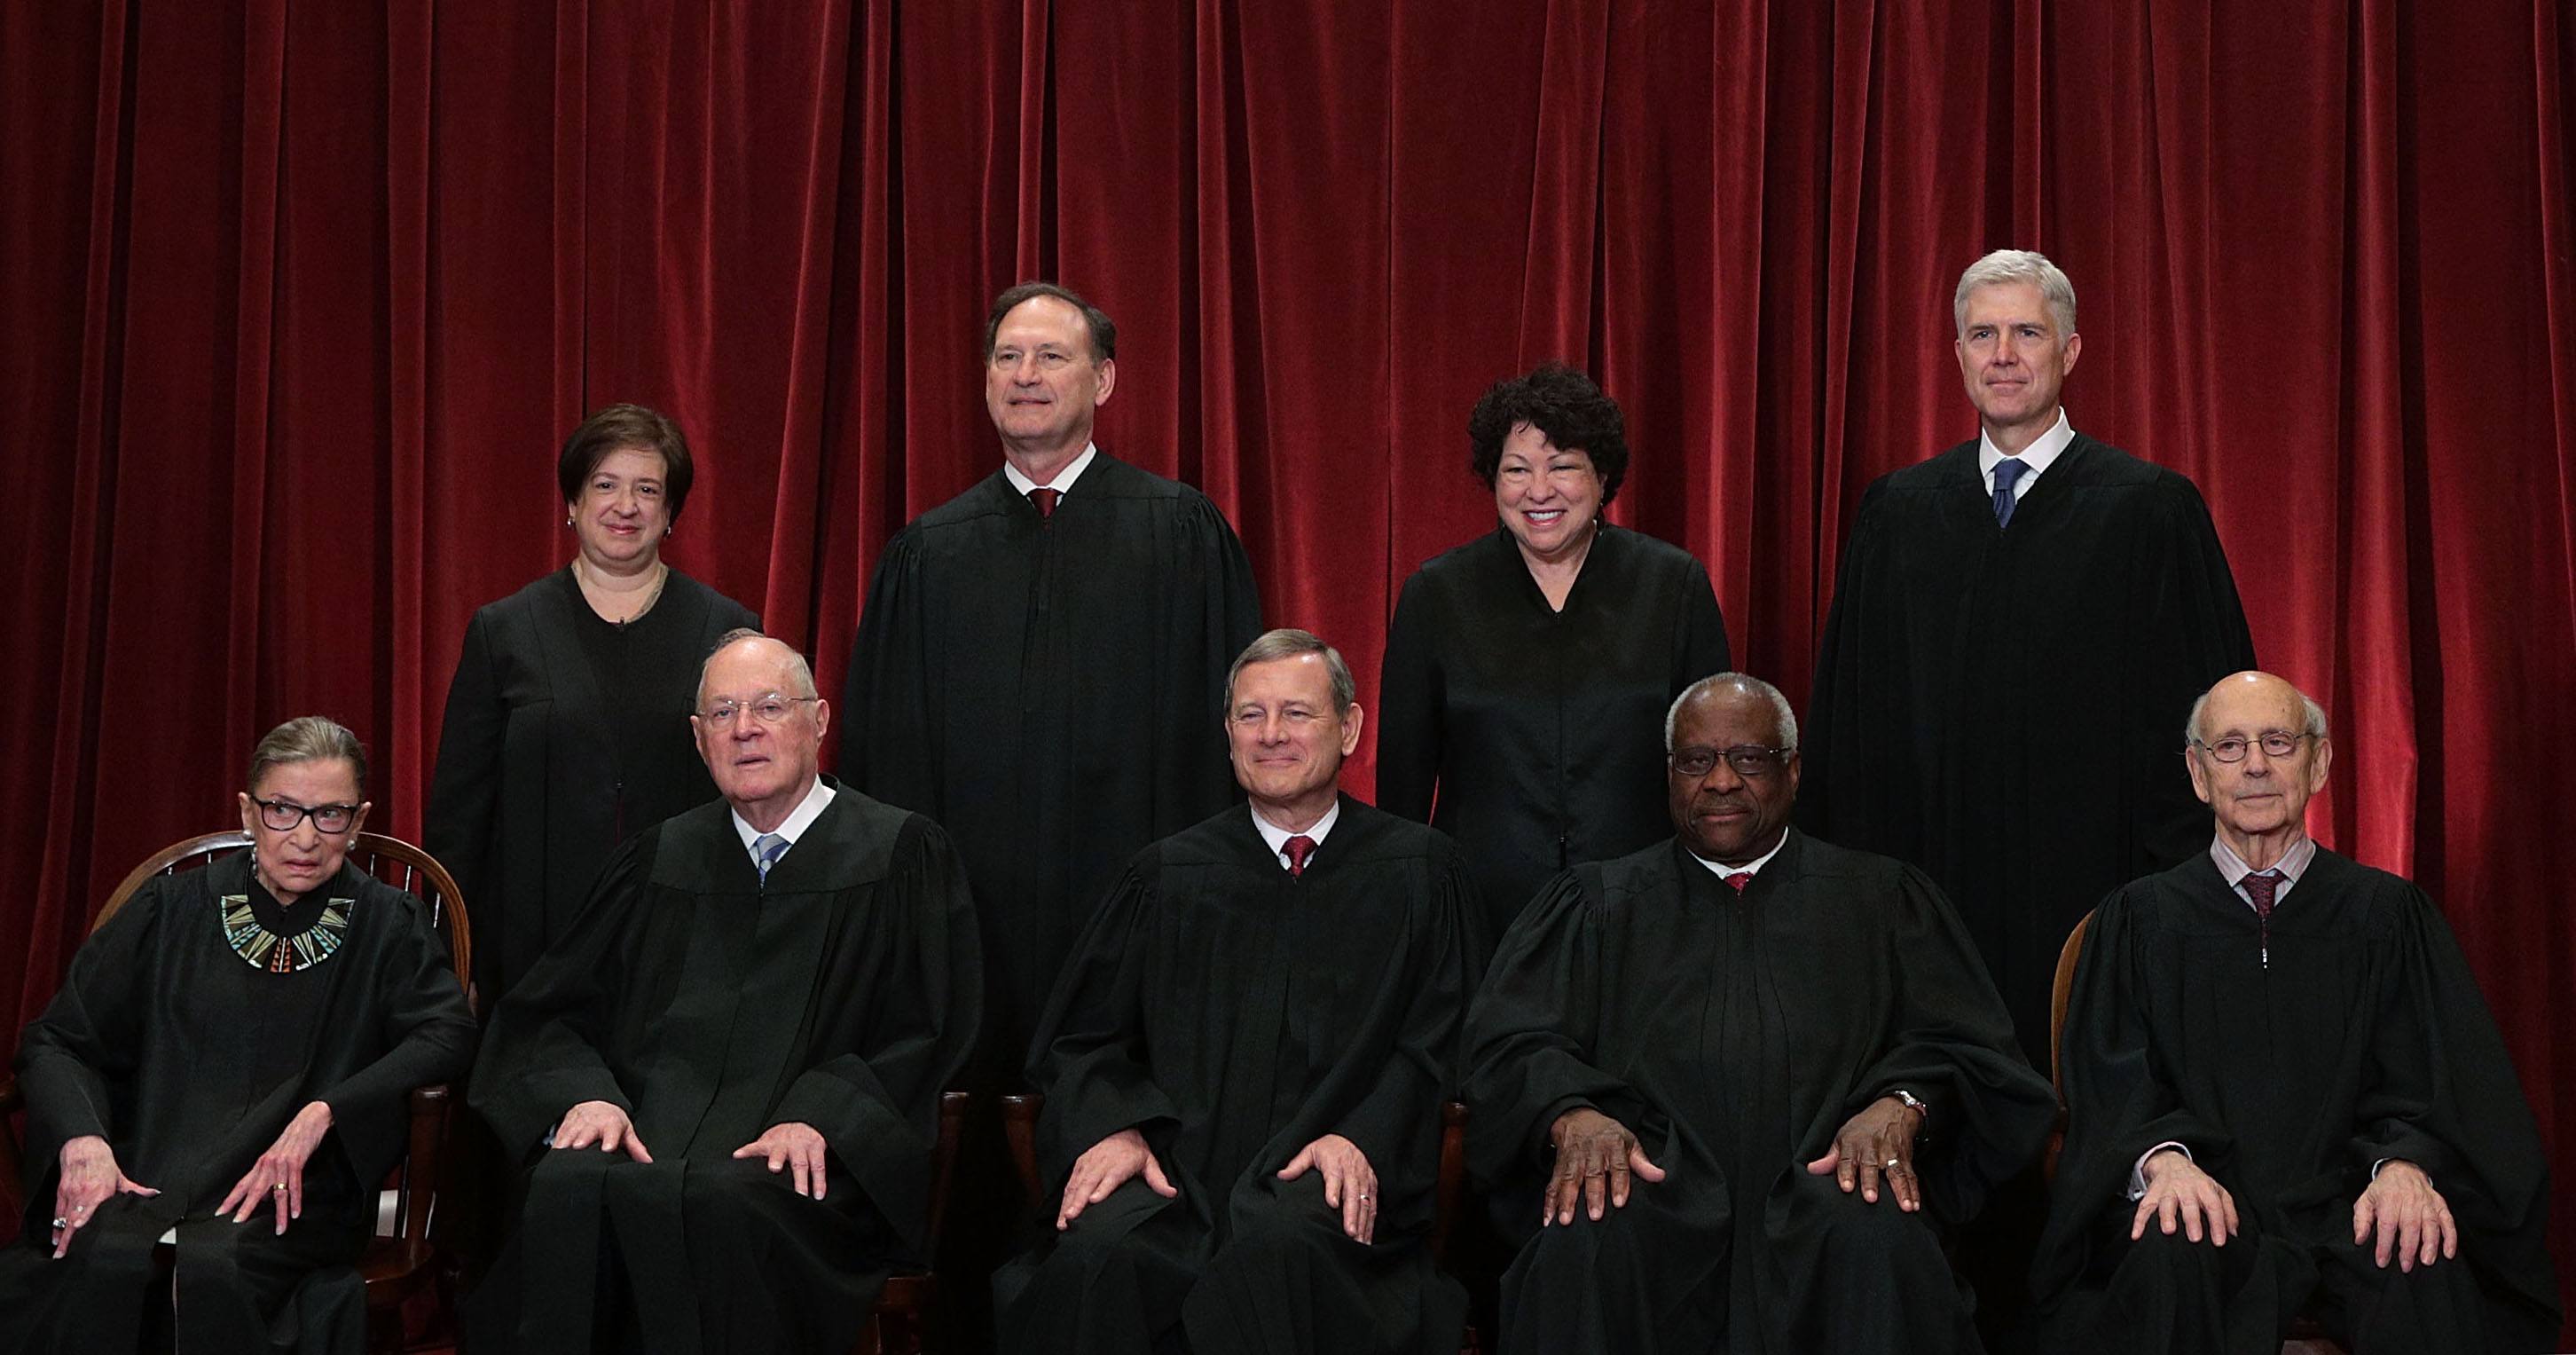 U.S. Supreme Court Justices Pose For Formal Portrait